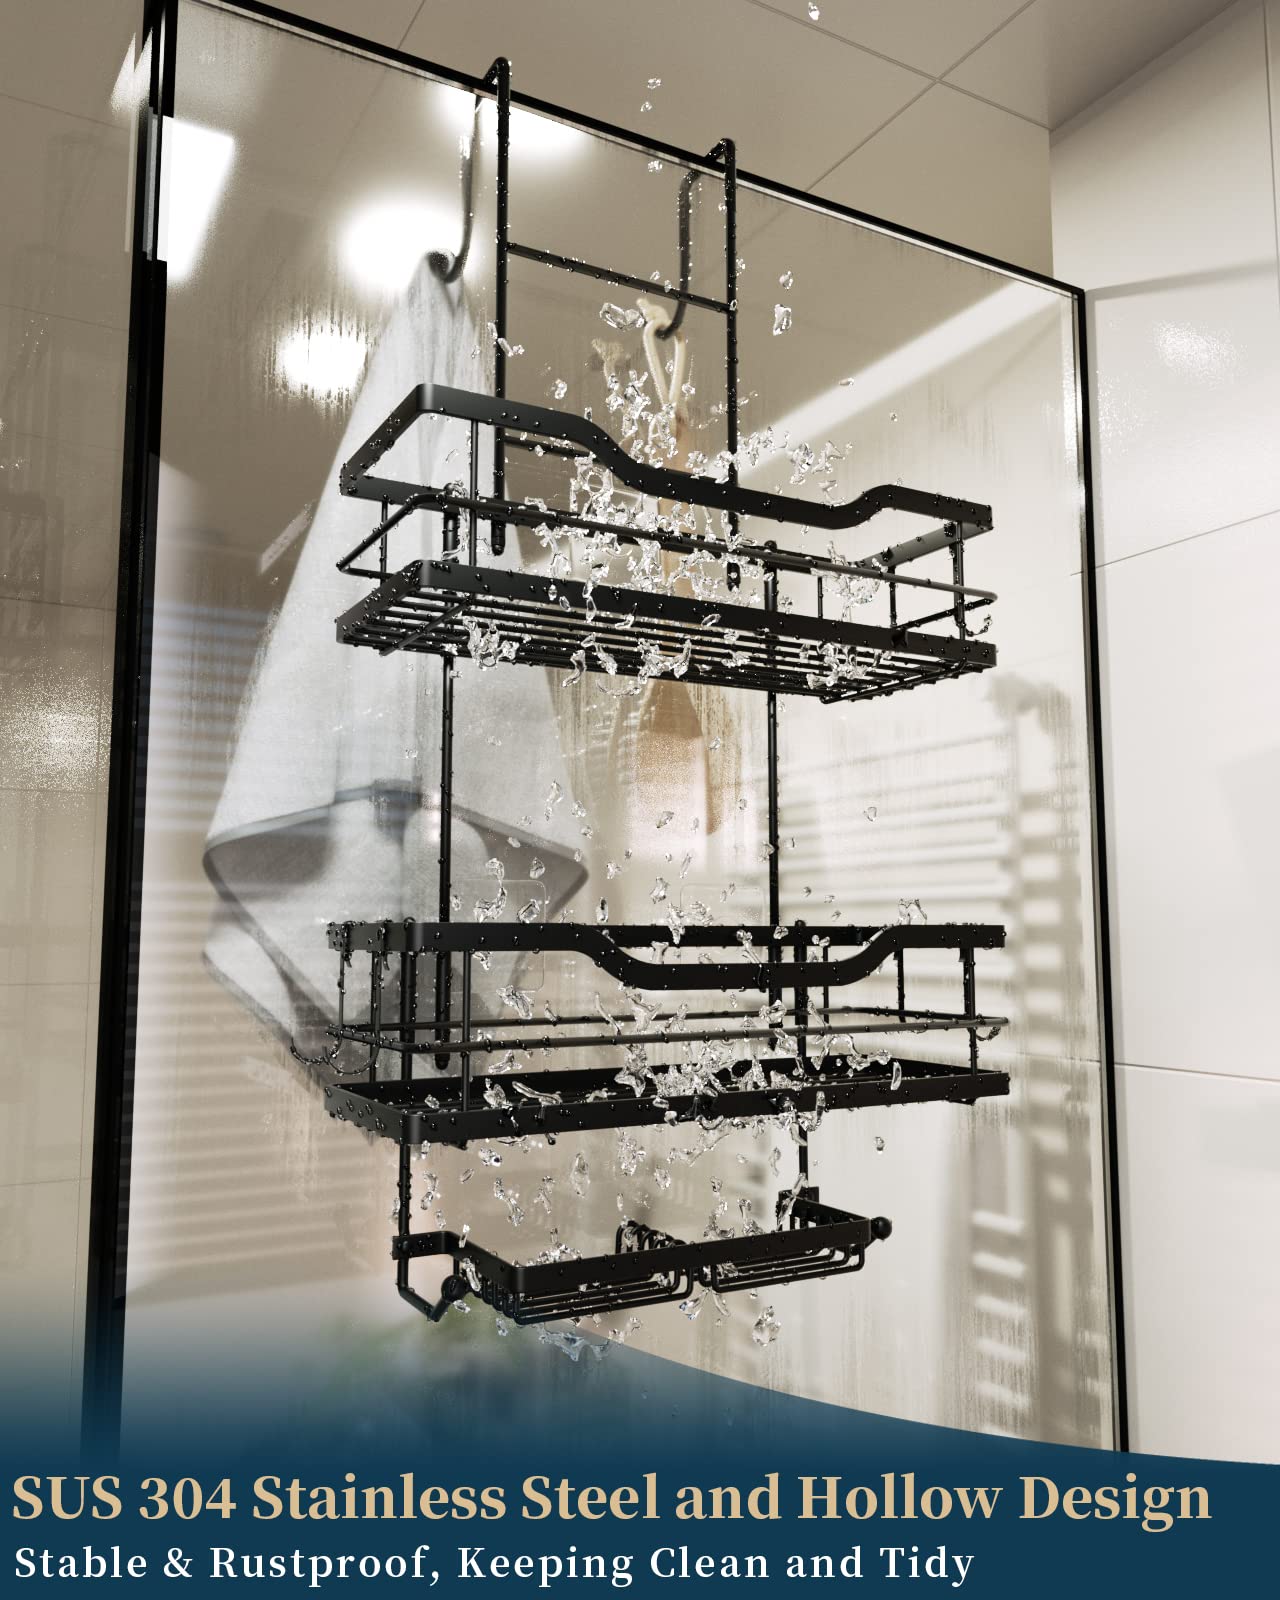 Consumest 3-Tier Hanging Shower Caddy Over the Door, Large Capacity Hanging Shower Organizer With 2 Soap Holder & 8 Hooks Rustproof Easy Installation Over Door Shower Shelf for Bathroom, Black